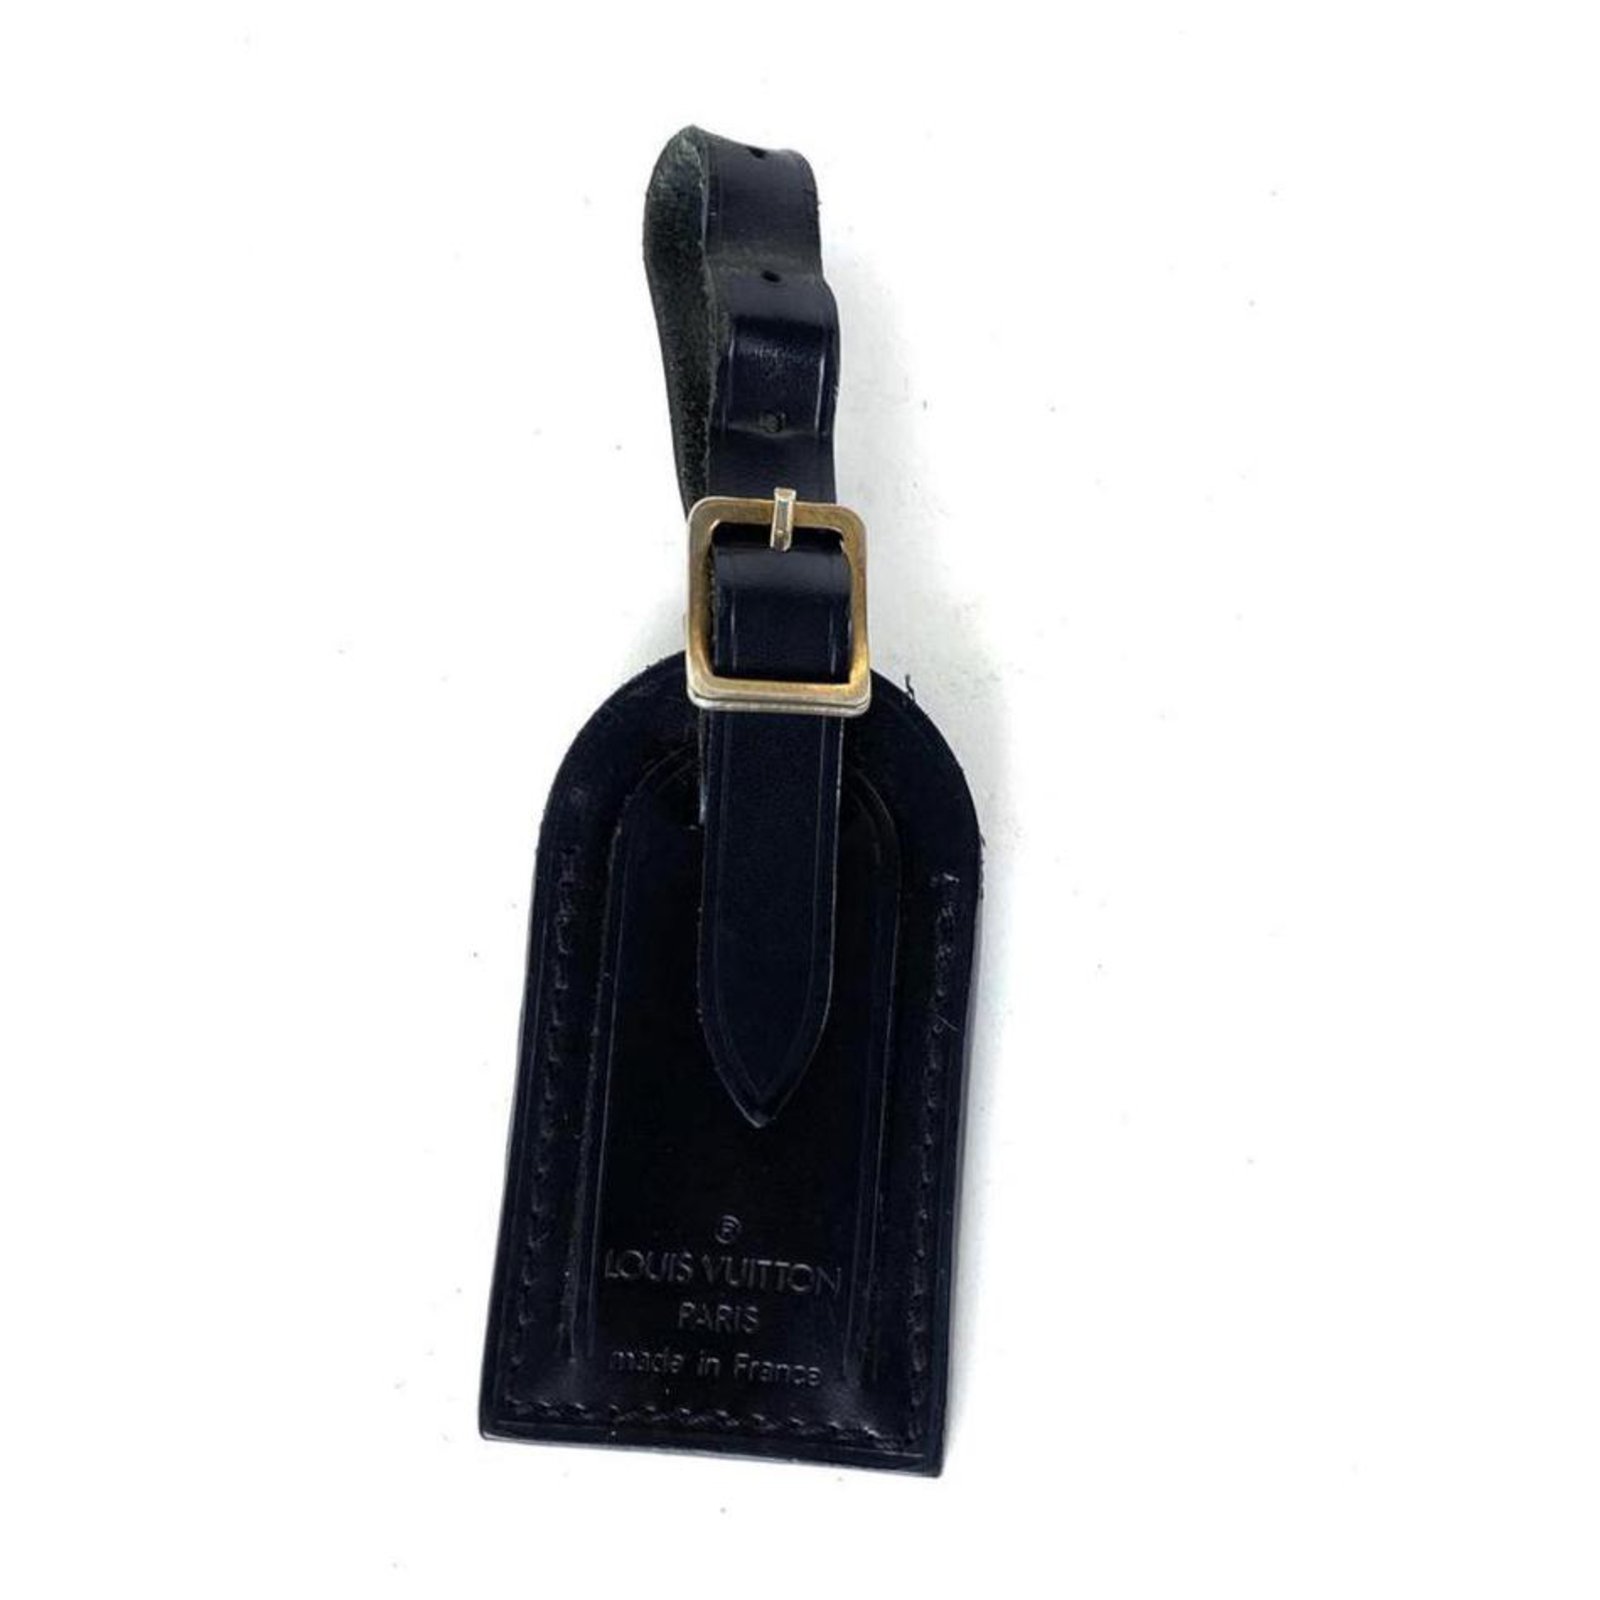 Louis Vuitton Black Leather Luggage Tag Bag Charm India